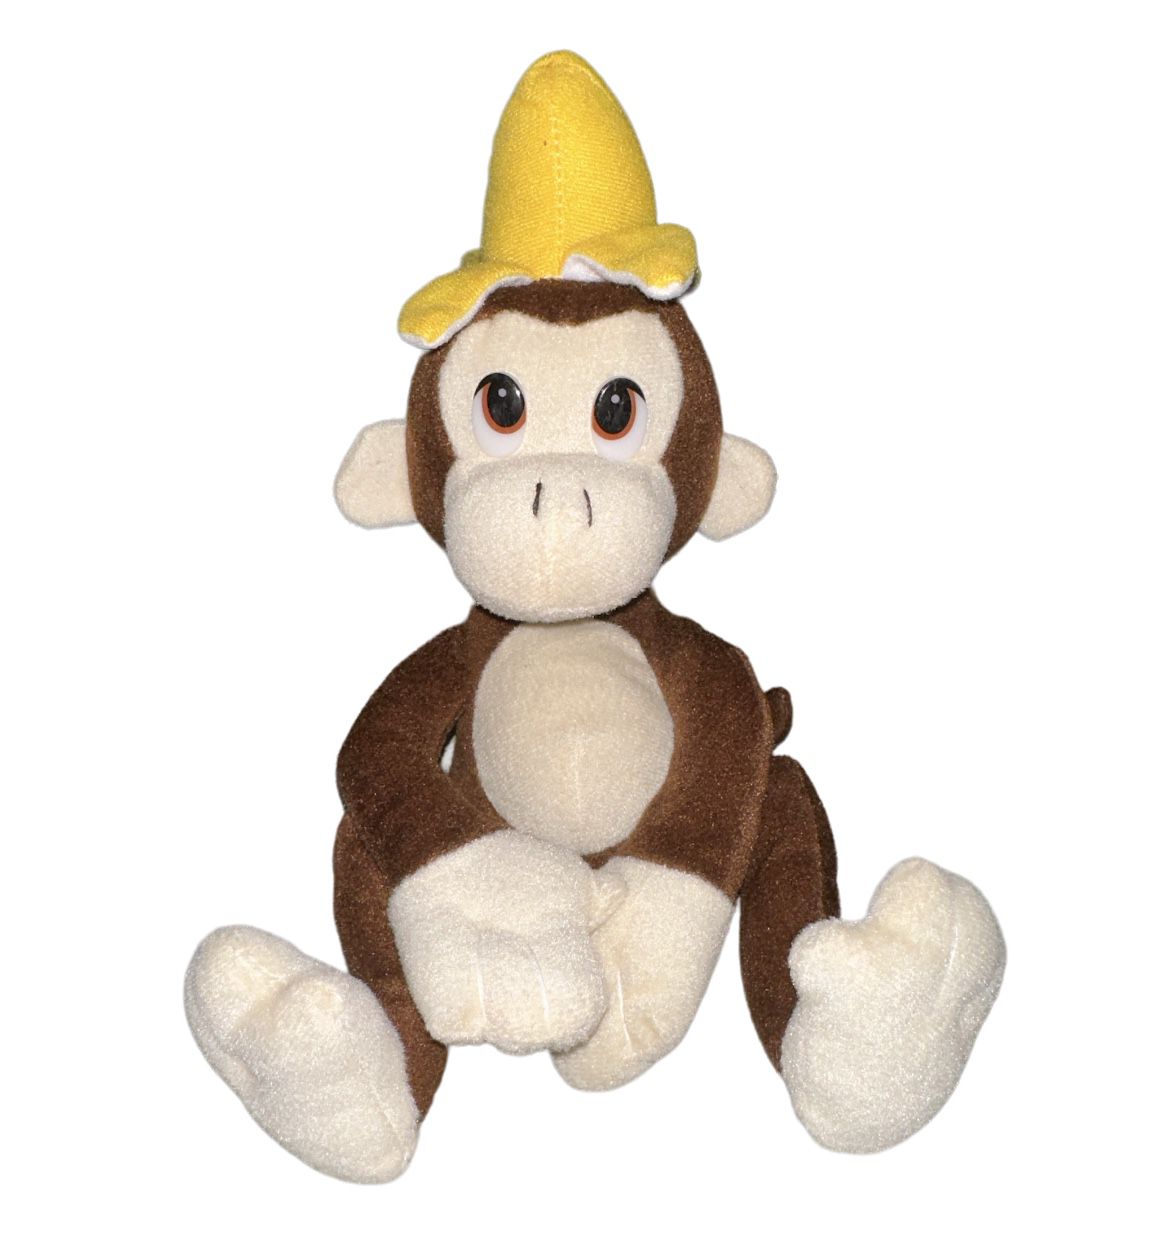 Asia Direct 2009 Stuffed Animal Brown Monkey With Banana Plush 12 Inches EUC